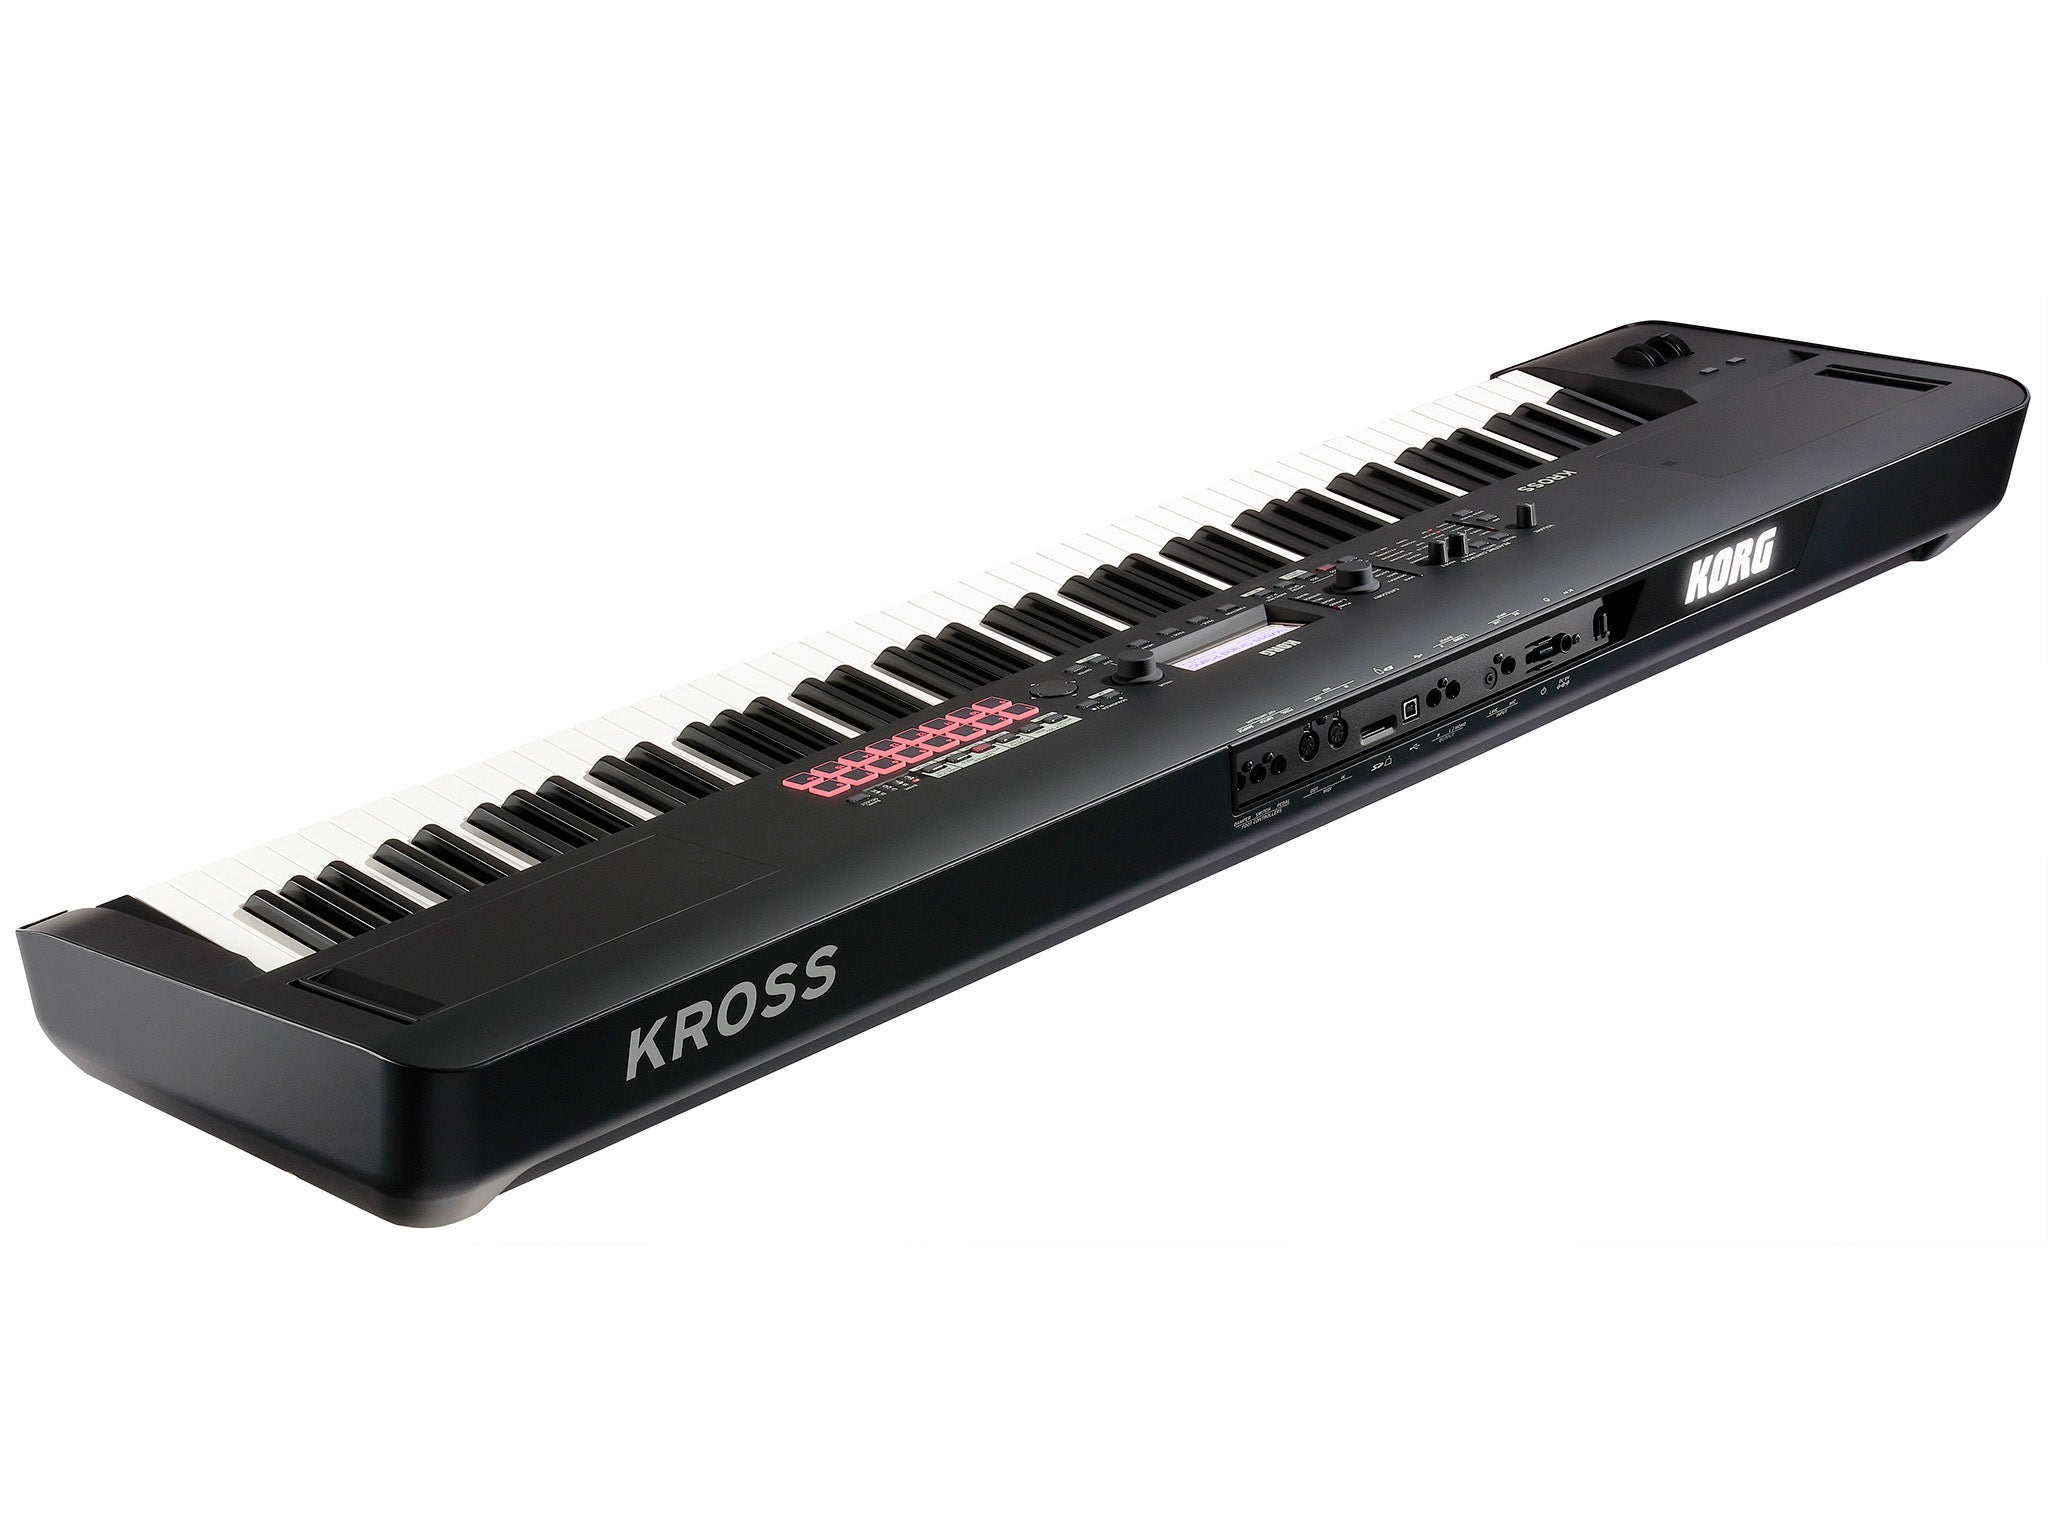 #keyboard length_88 Keys (weighted)